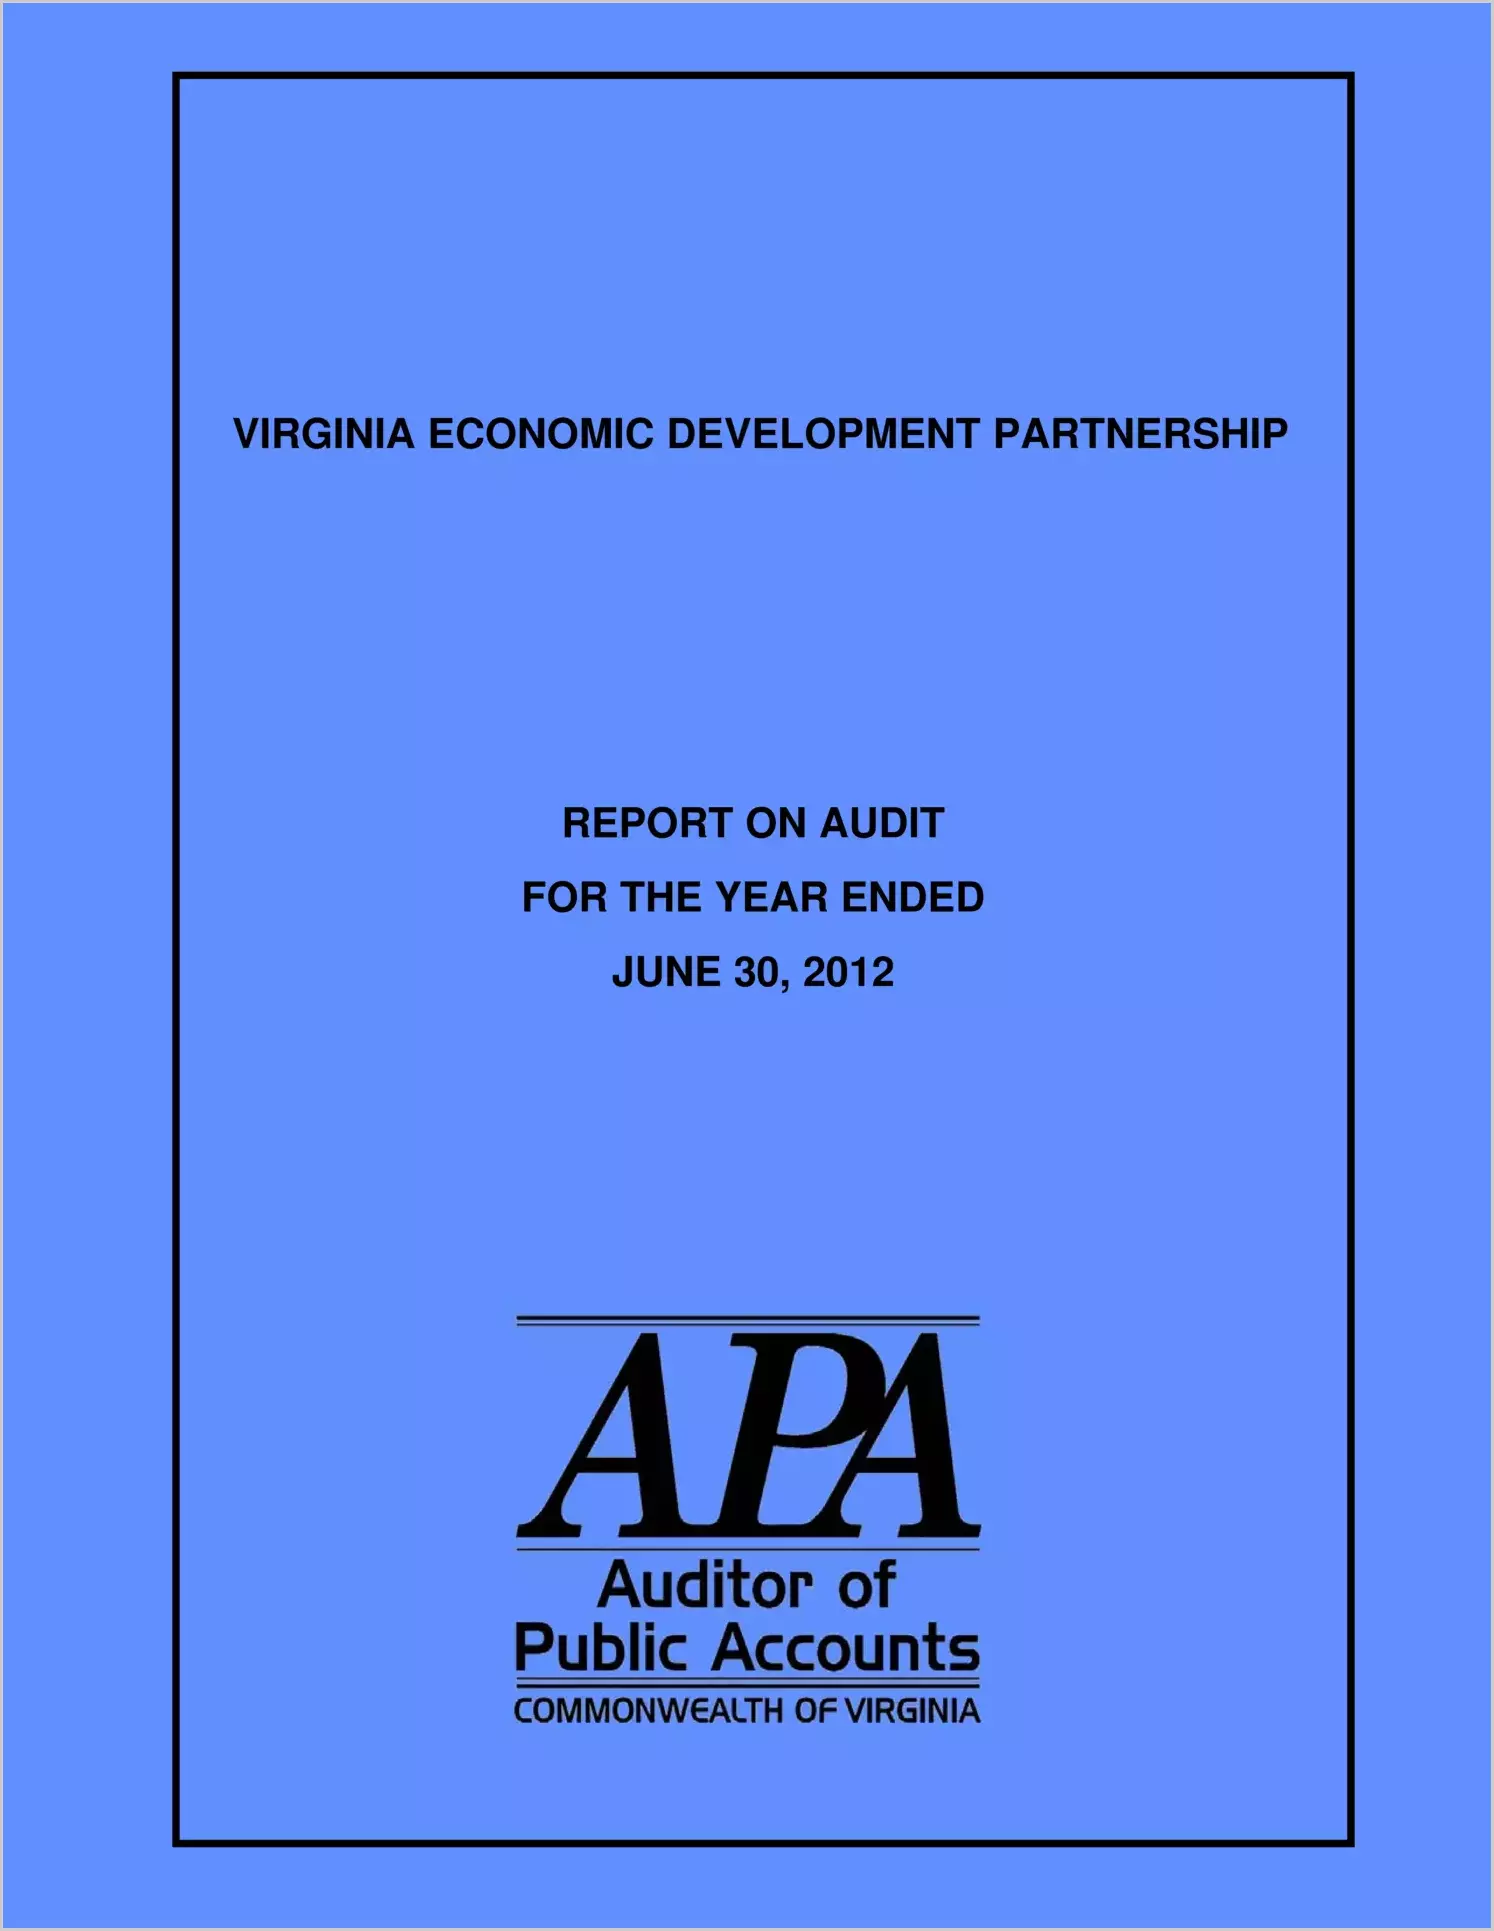 Virginia Economic Development Partnership for the year ended June 30, 2012